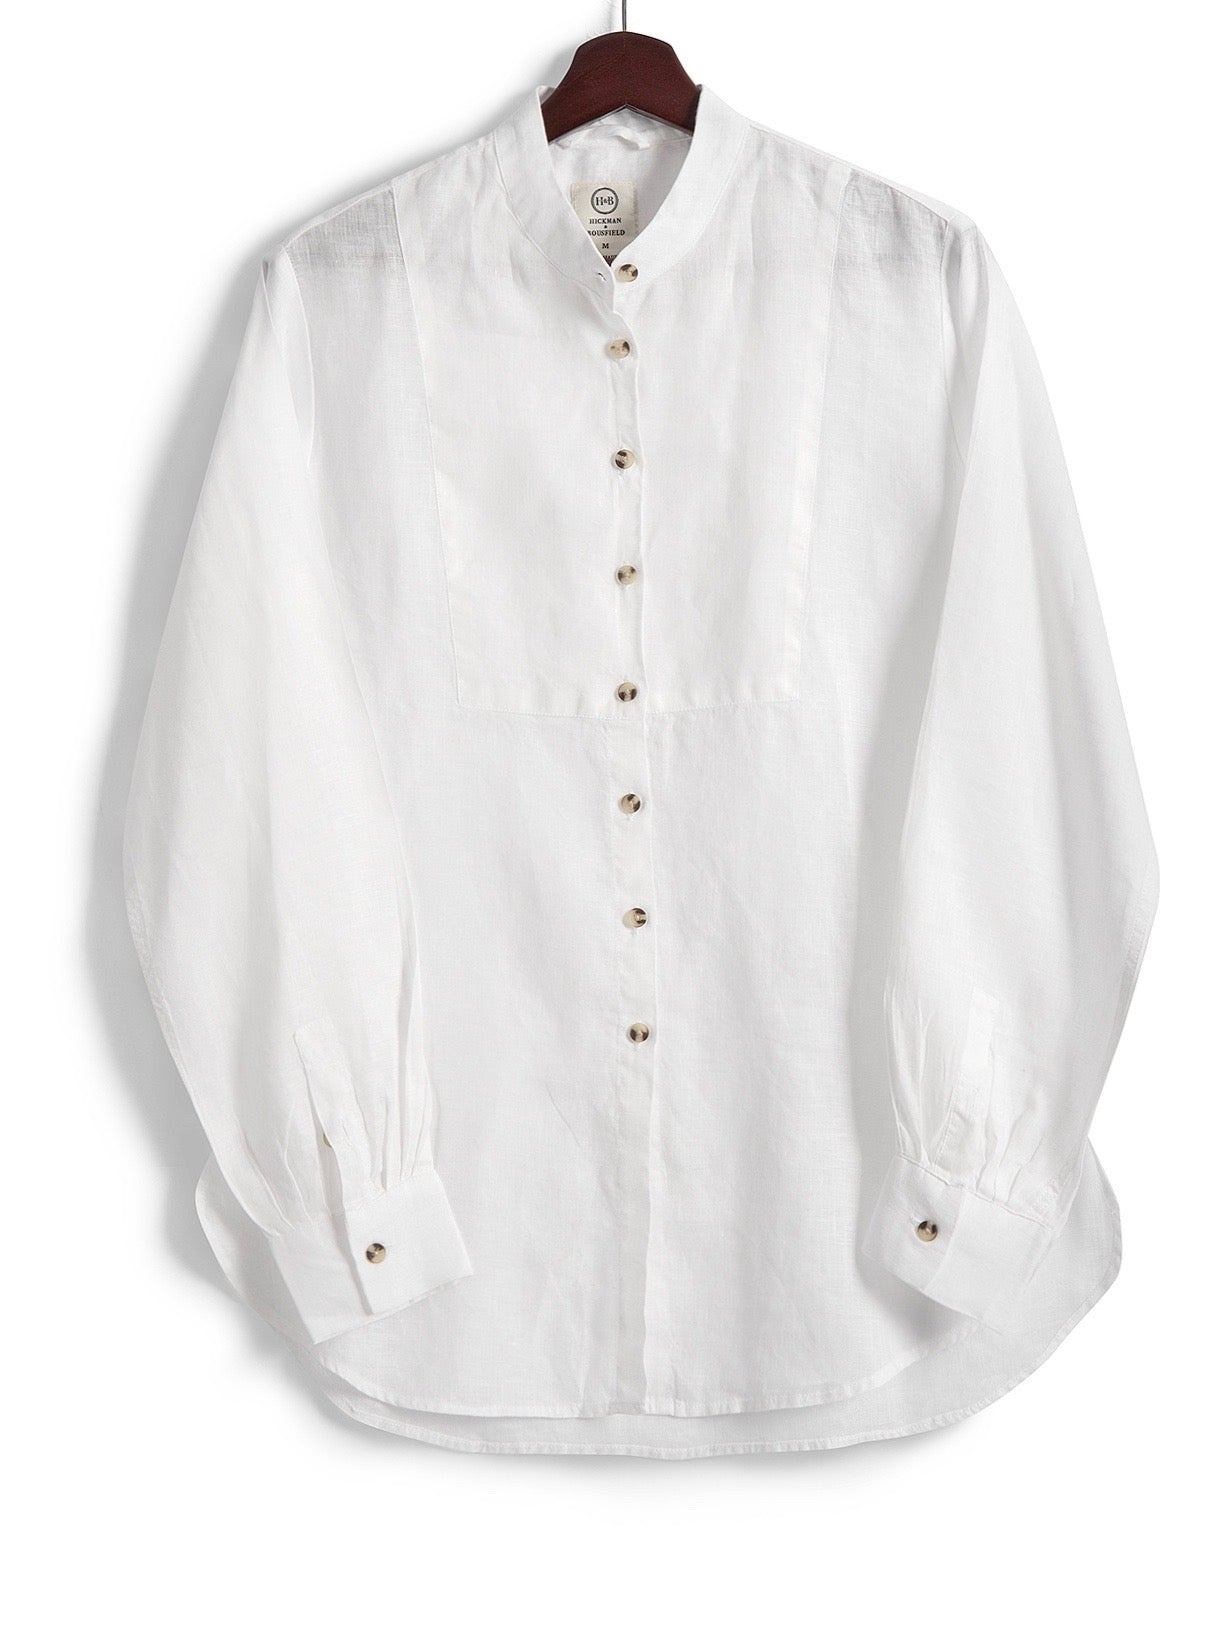 Bib Shirt in White Linen, Shirt, Hickman & Bousfied - Hickman & Bousfield, Safari and Travel Clothing